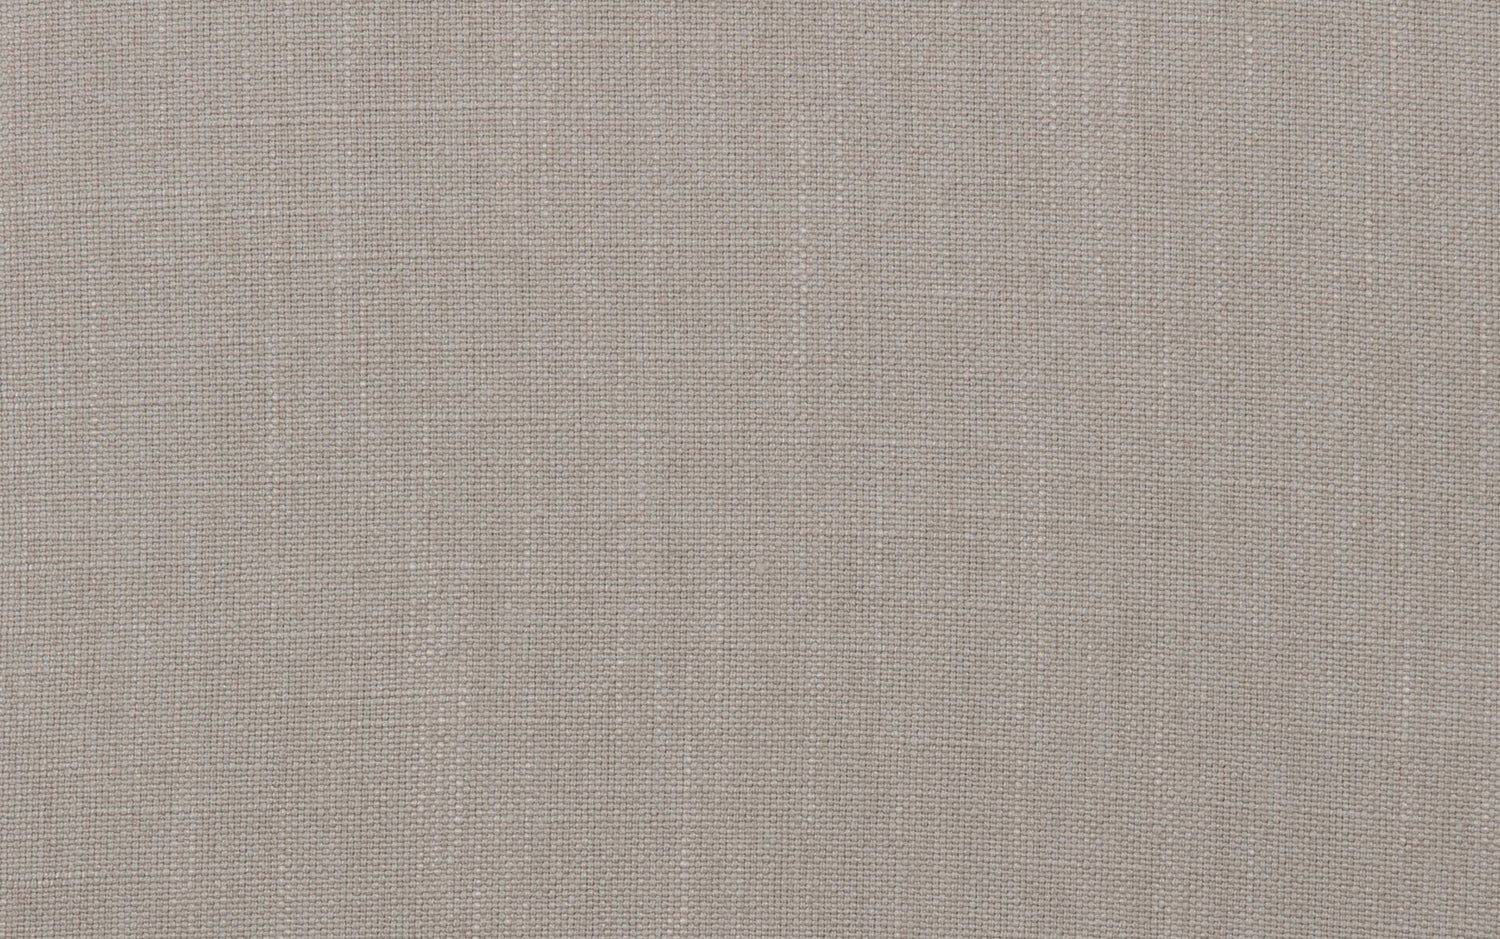 Light Beige Linen Style Fabric | Acadian 9 Piece Dining Set